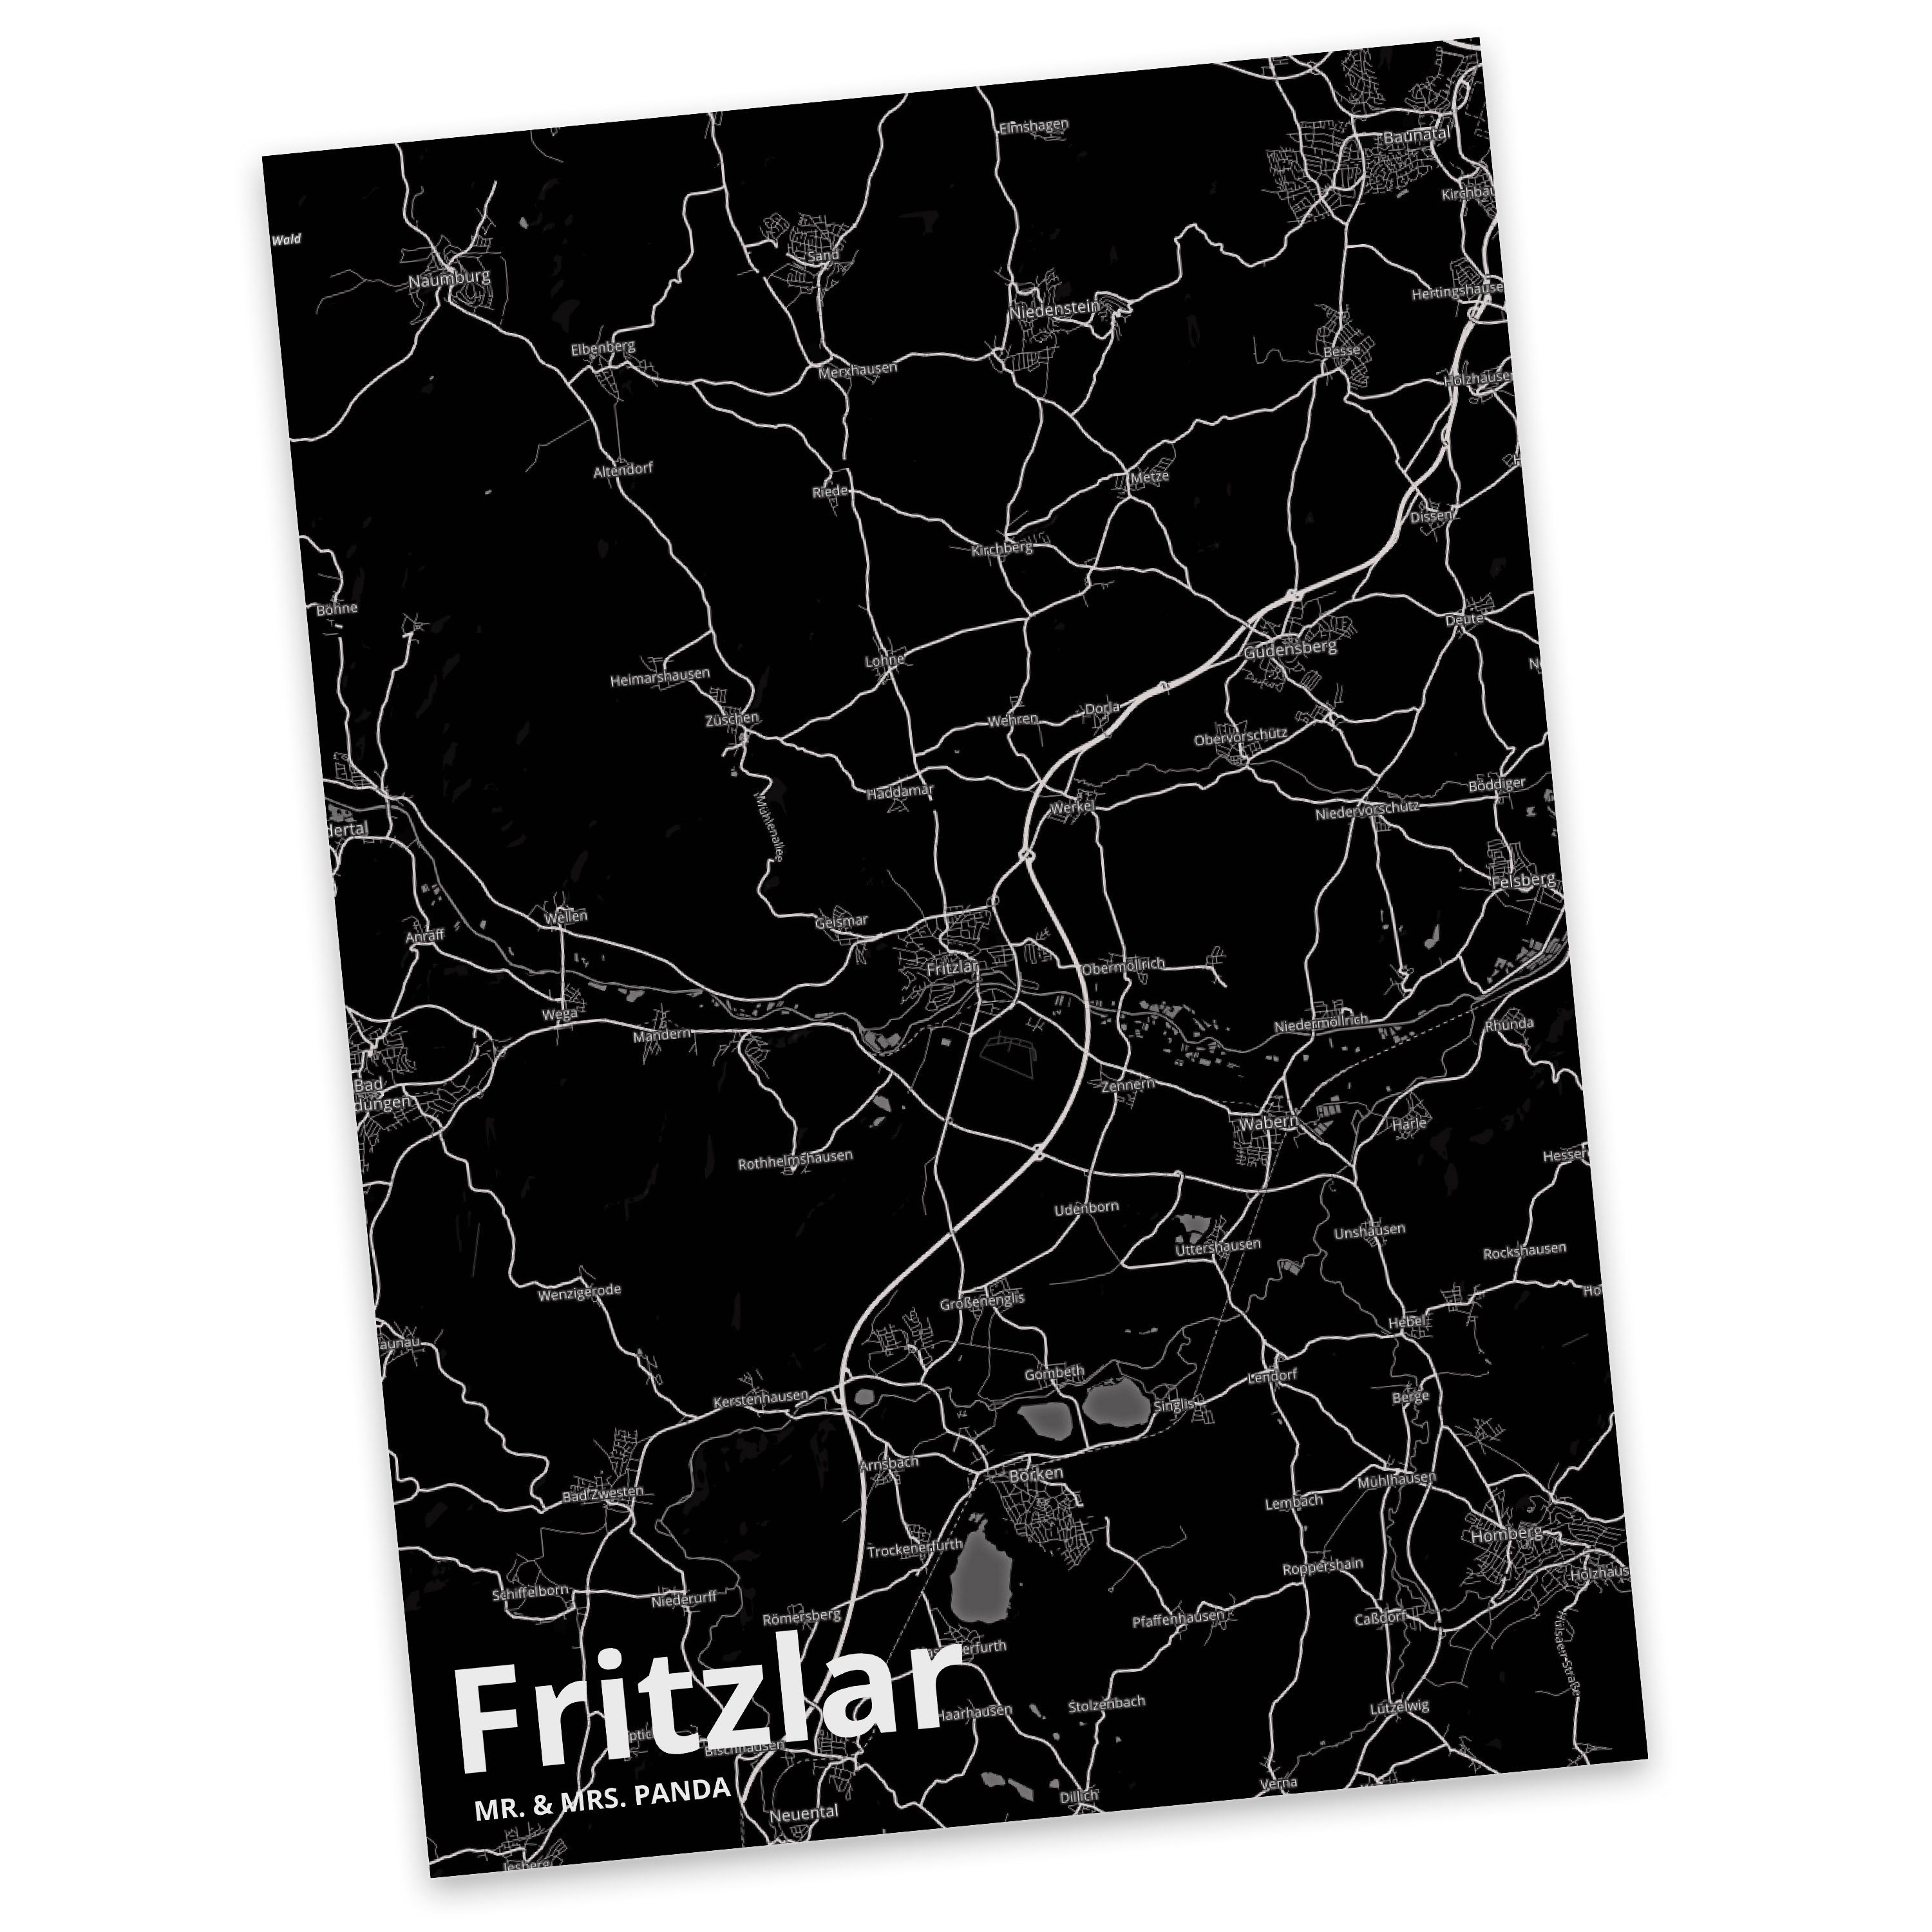 Mr. & Mrs. Panda Postkarte Fritzlar - Geschenk, Ort, Stadt Dorf Karte Landkarte Map Stadtplan, A